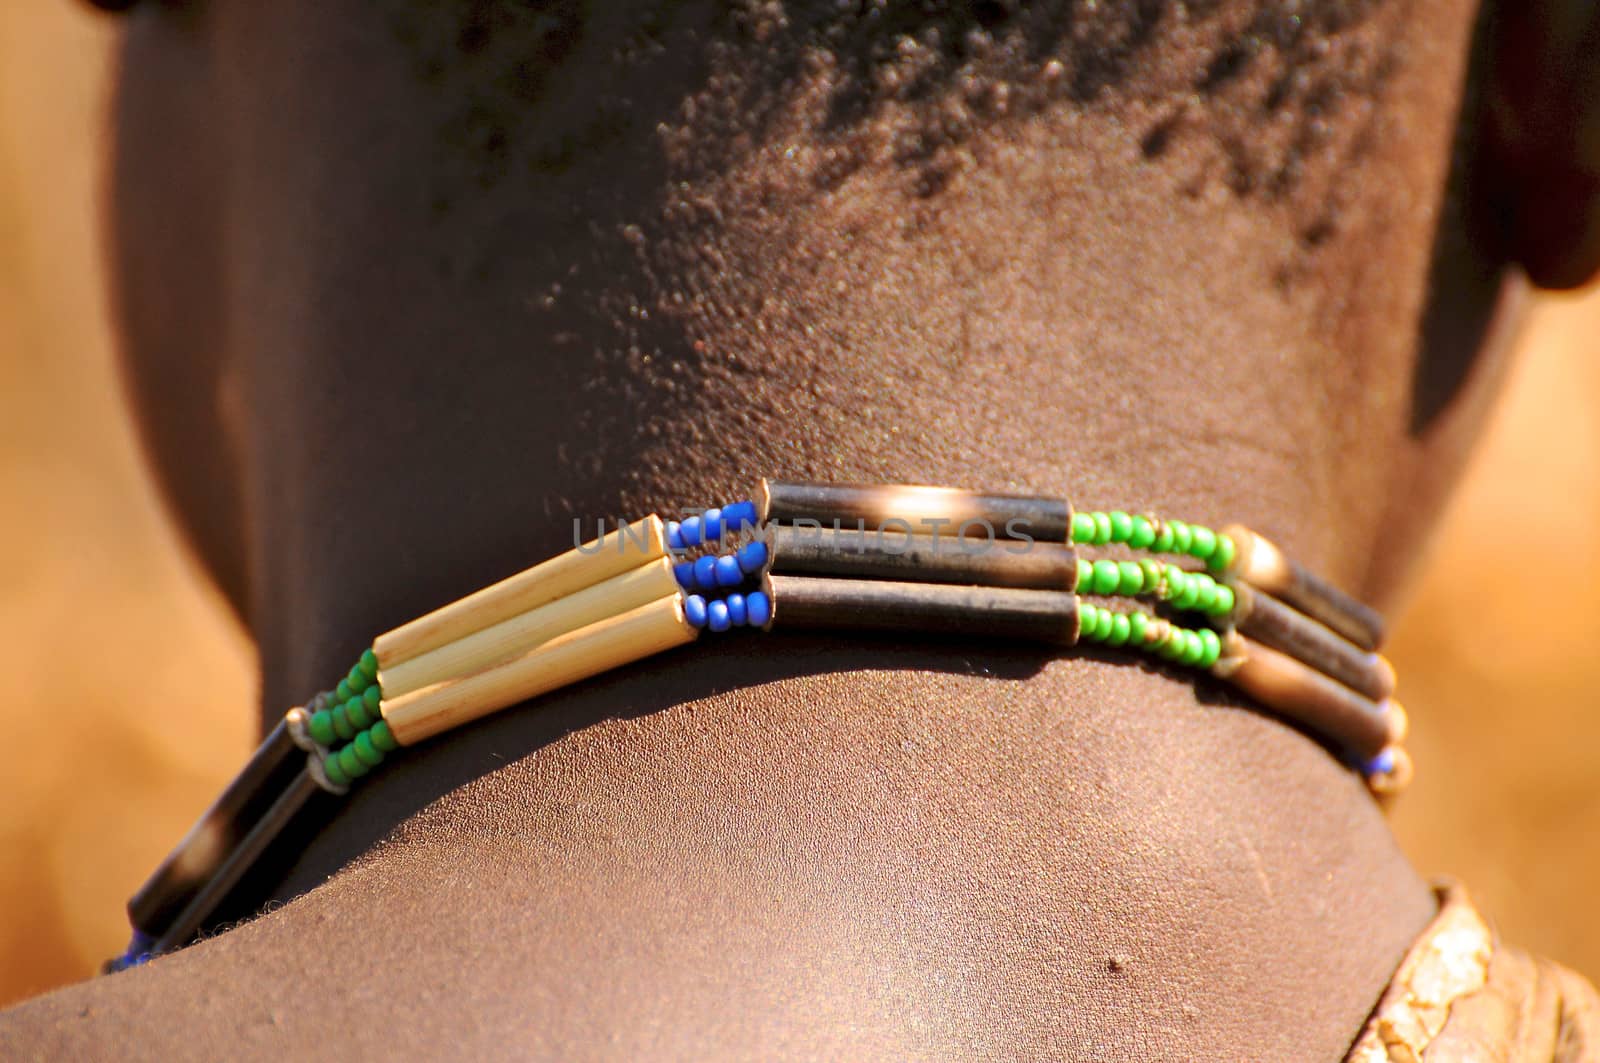 handmade bead work jewellery from Tanzania